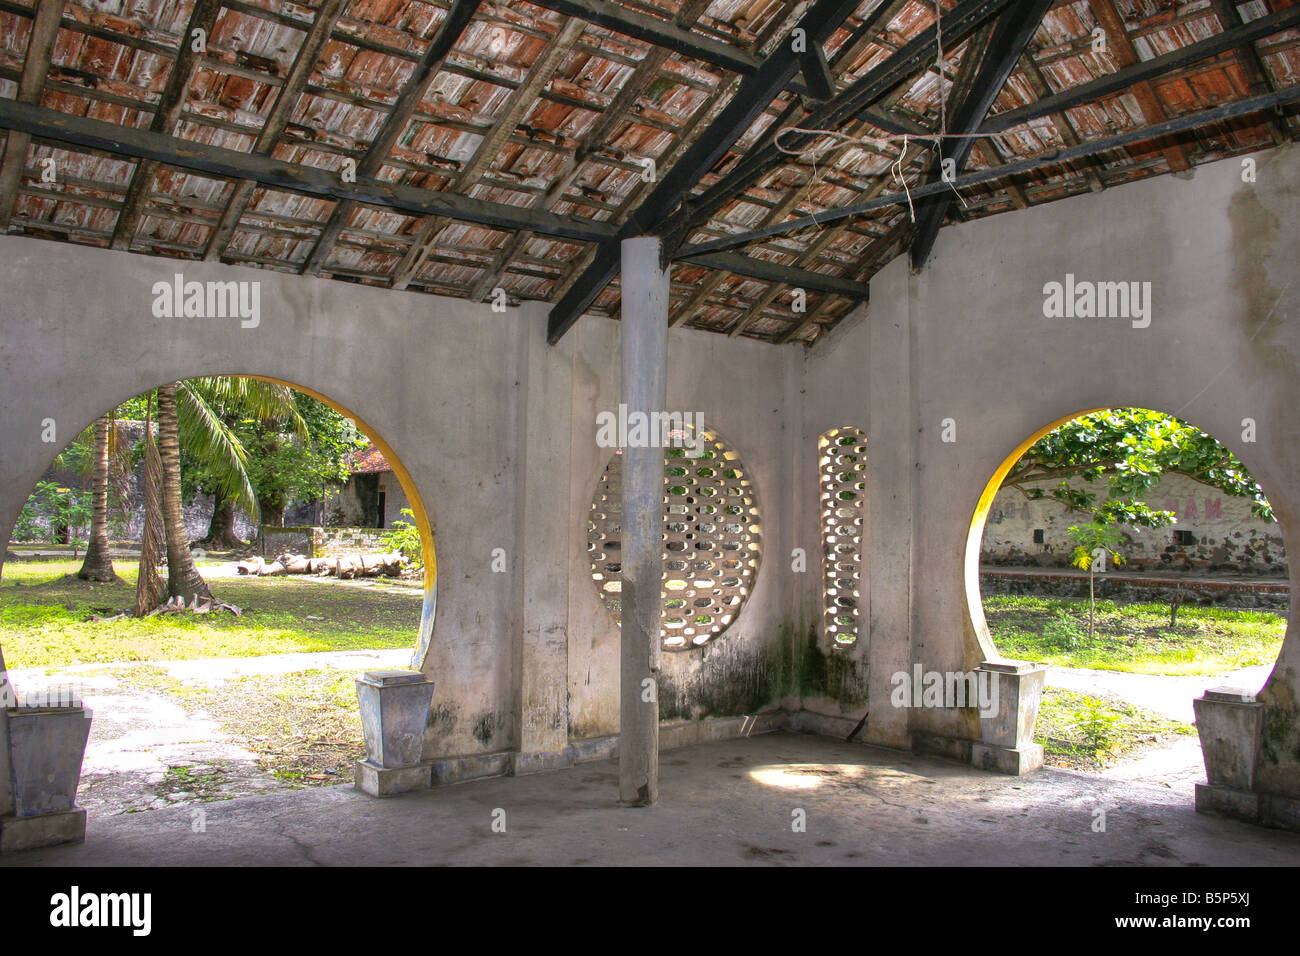 house hall in poulo condor island's convict prison, french colony, Vietnam Stock Photo